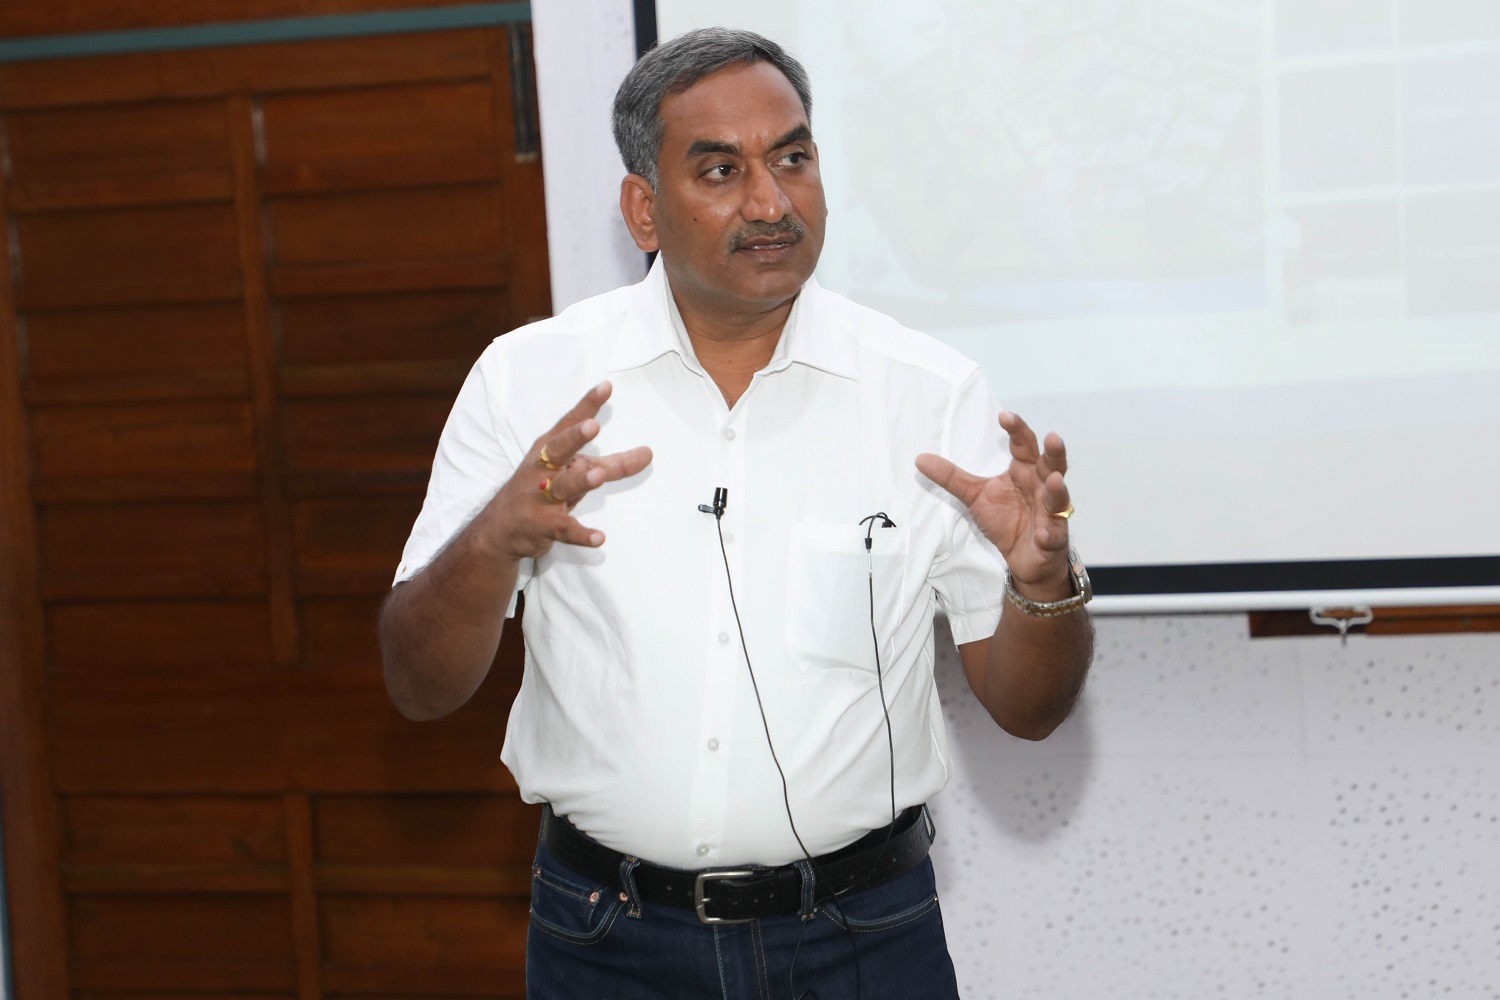 Thirumala Arohi Mamunooru, Senior Vice President & Head – Education, Training & Assessments (ETA), Infosys, addresses participants on: ‘Case-in-Point: Experience of Infosys in L&D’.